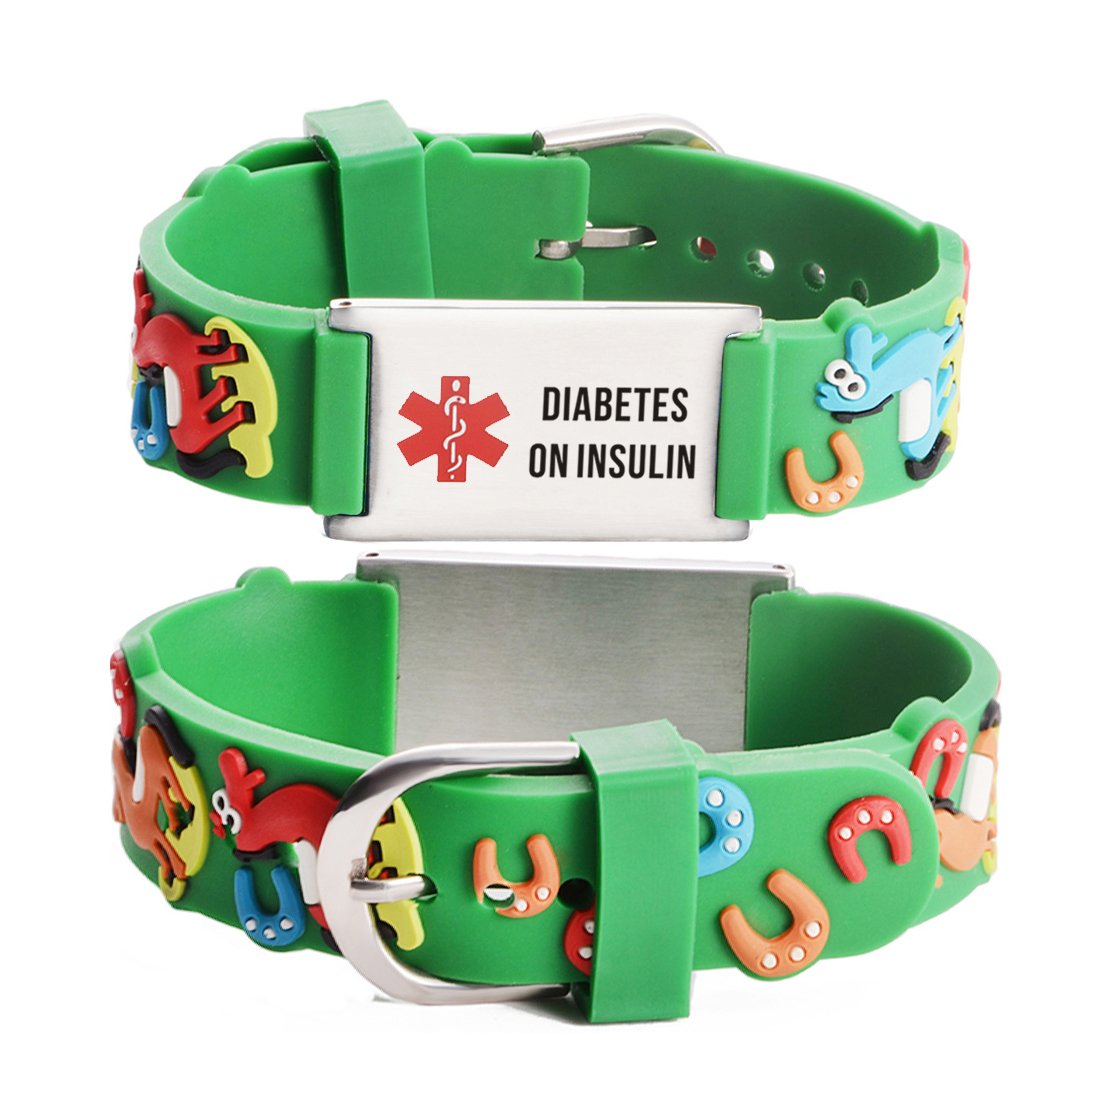 Diabetes bracelets for kids-Carousel